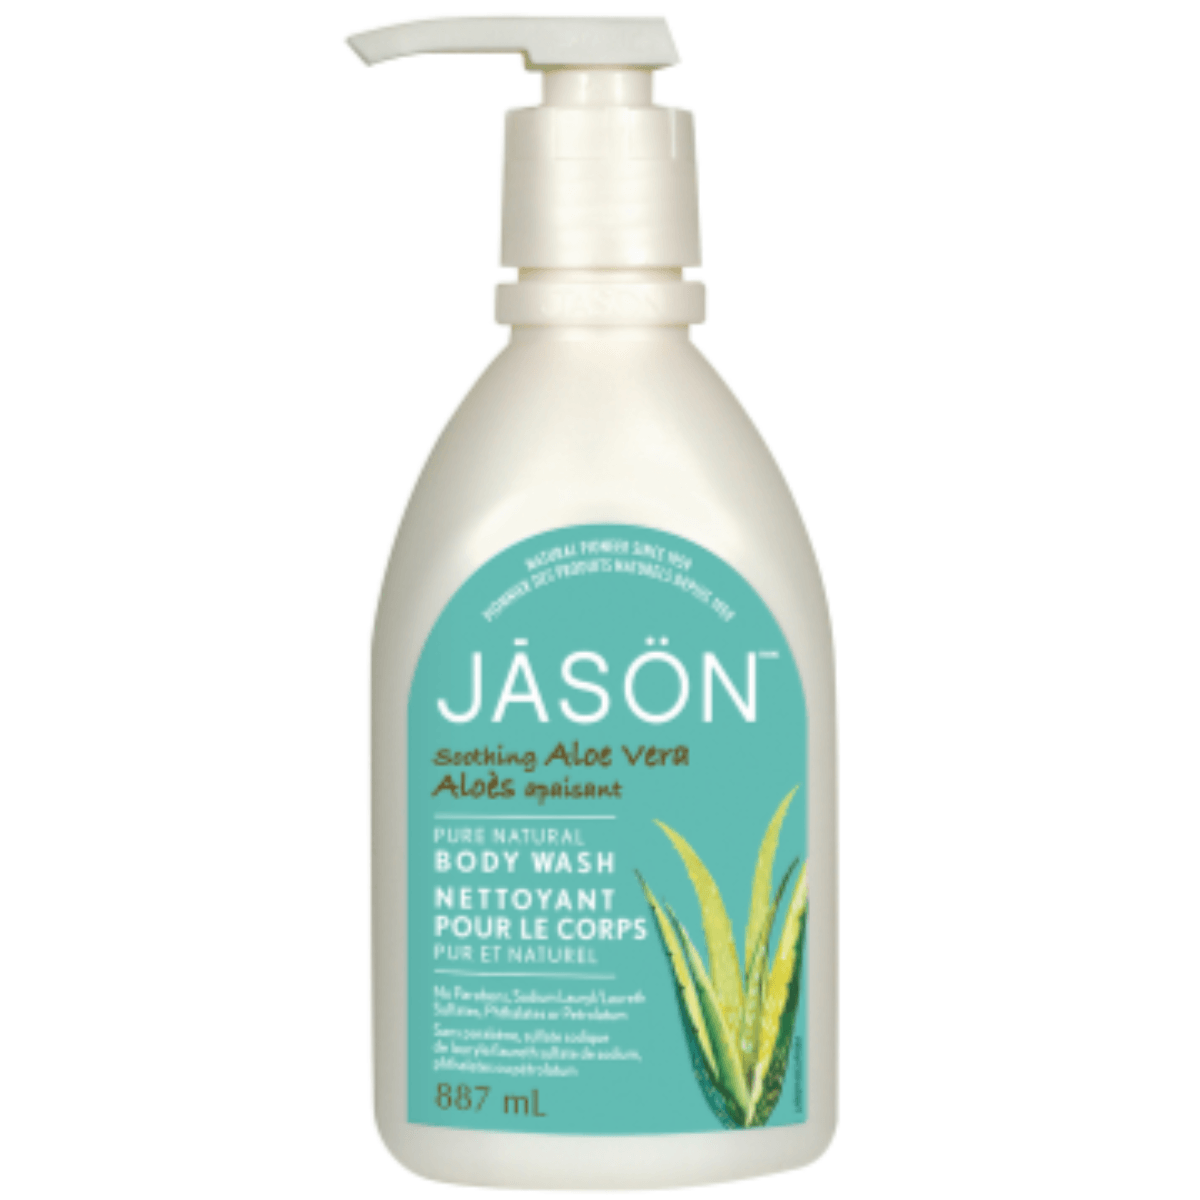 Jason Soothing Aloe Vera Body Wash 887mL Soap & Gel at Village Vitamin Store